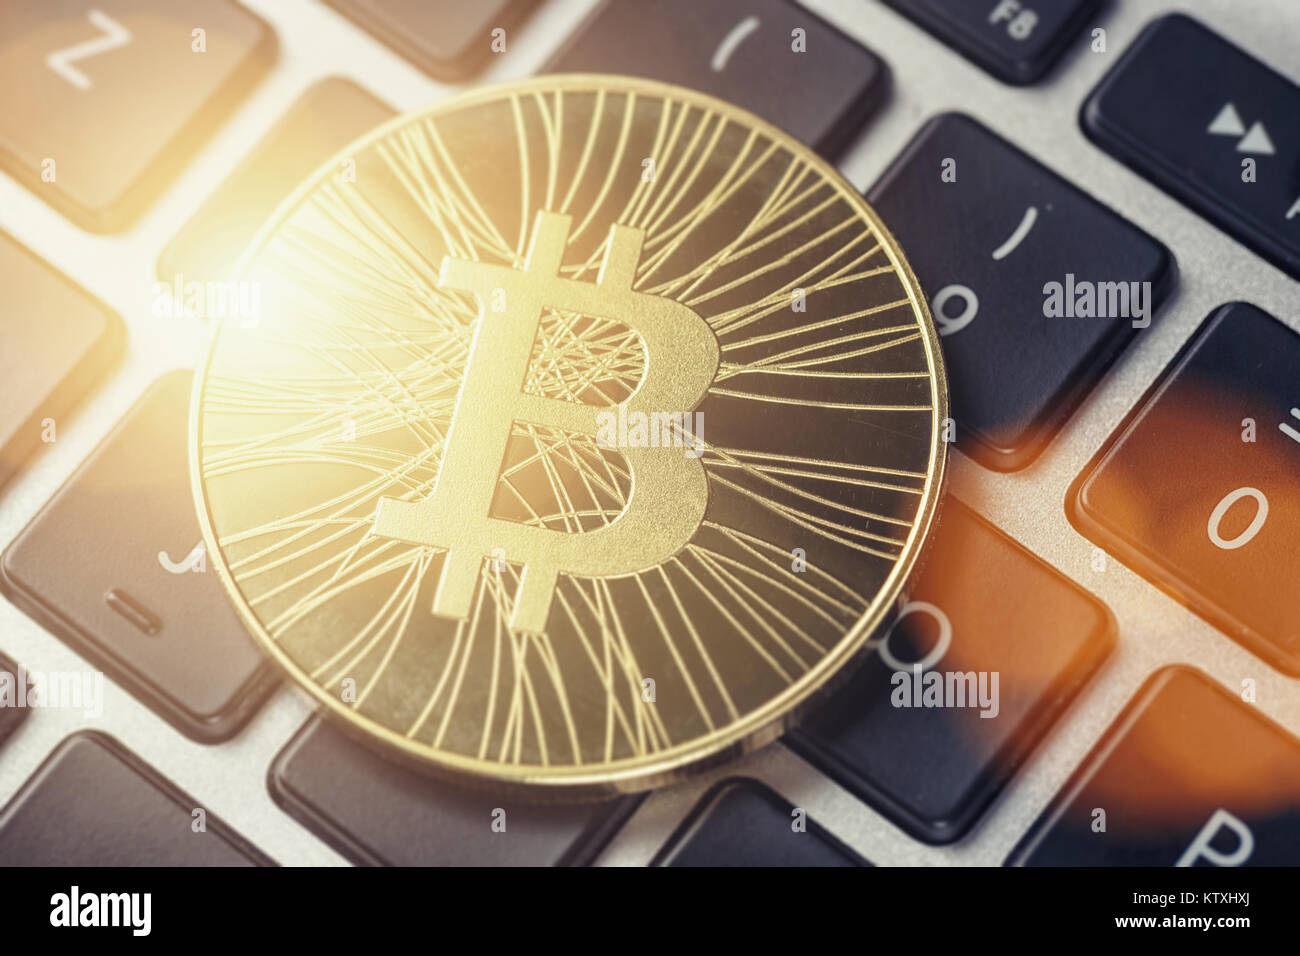 Golden Bitcoin Cash - New virtual money on keyboard Stock Photo